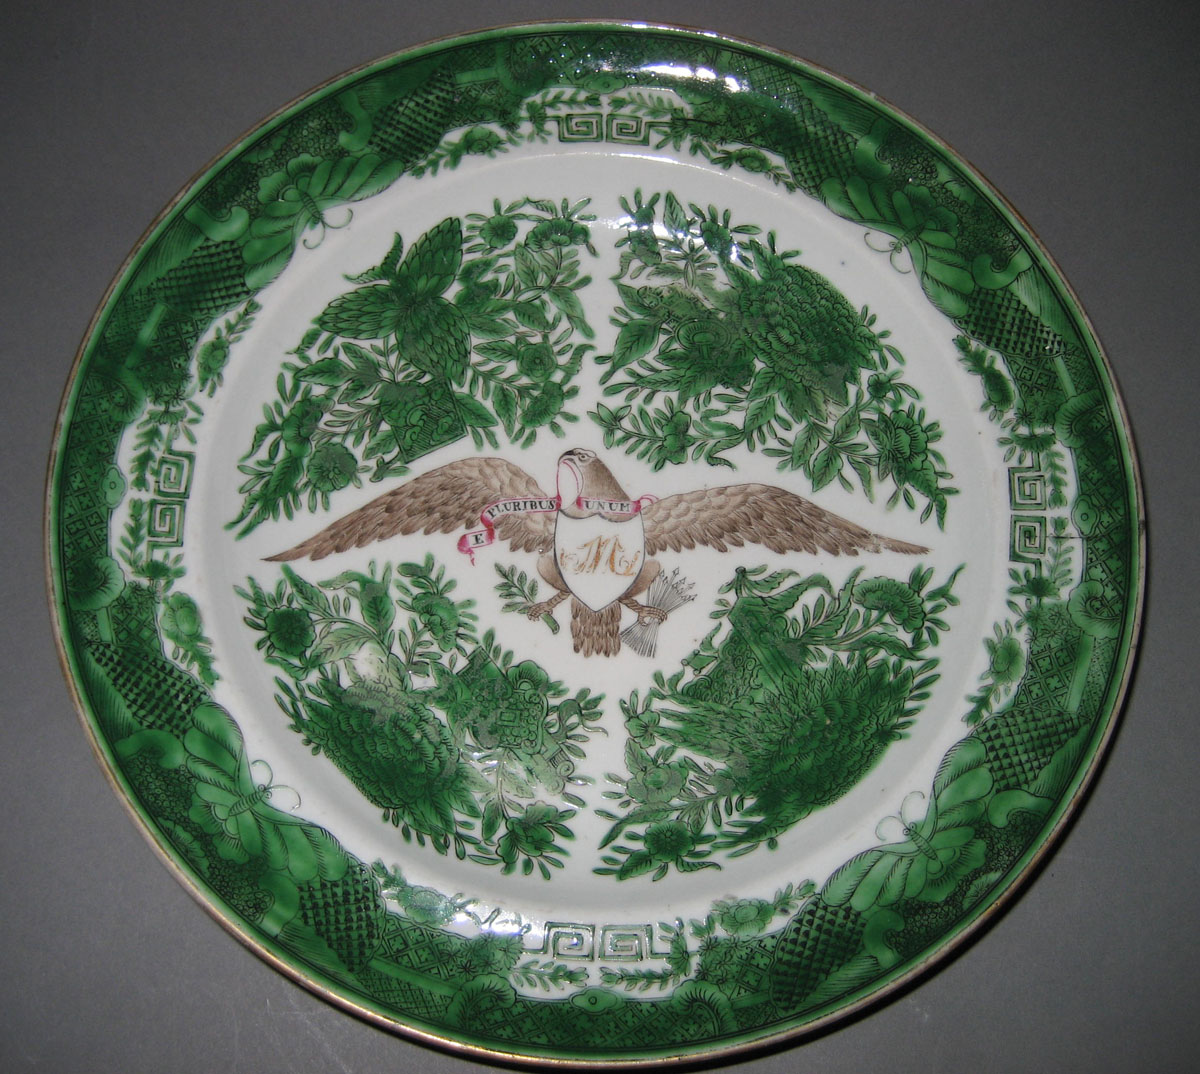 1956.0548.003 Porcelain Plate or Bowl